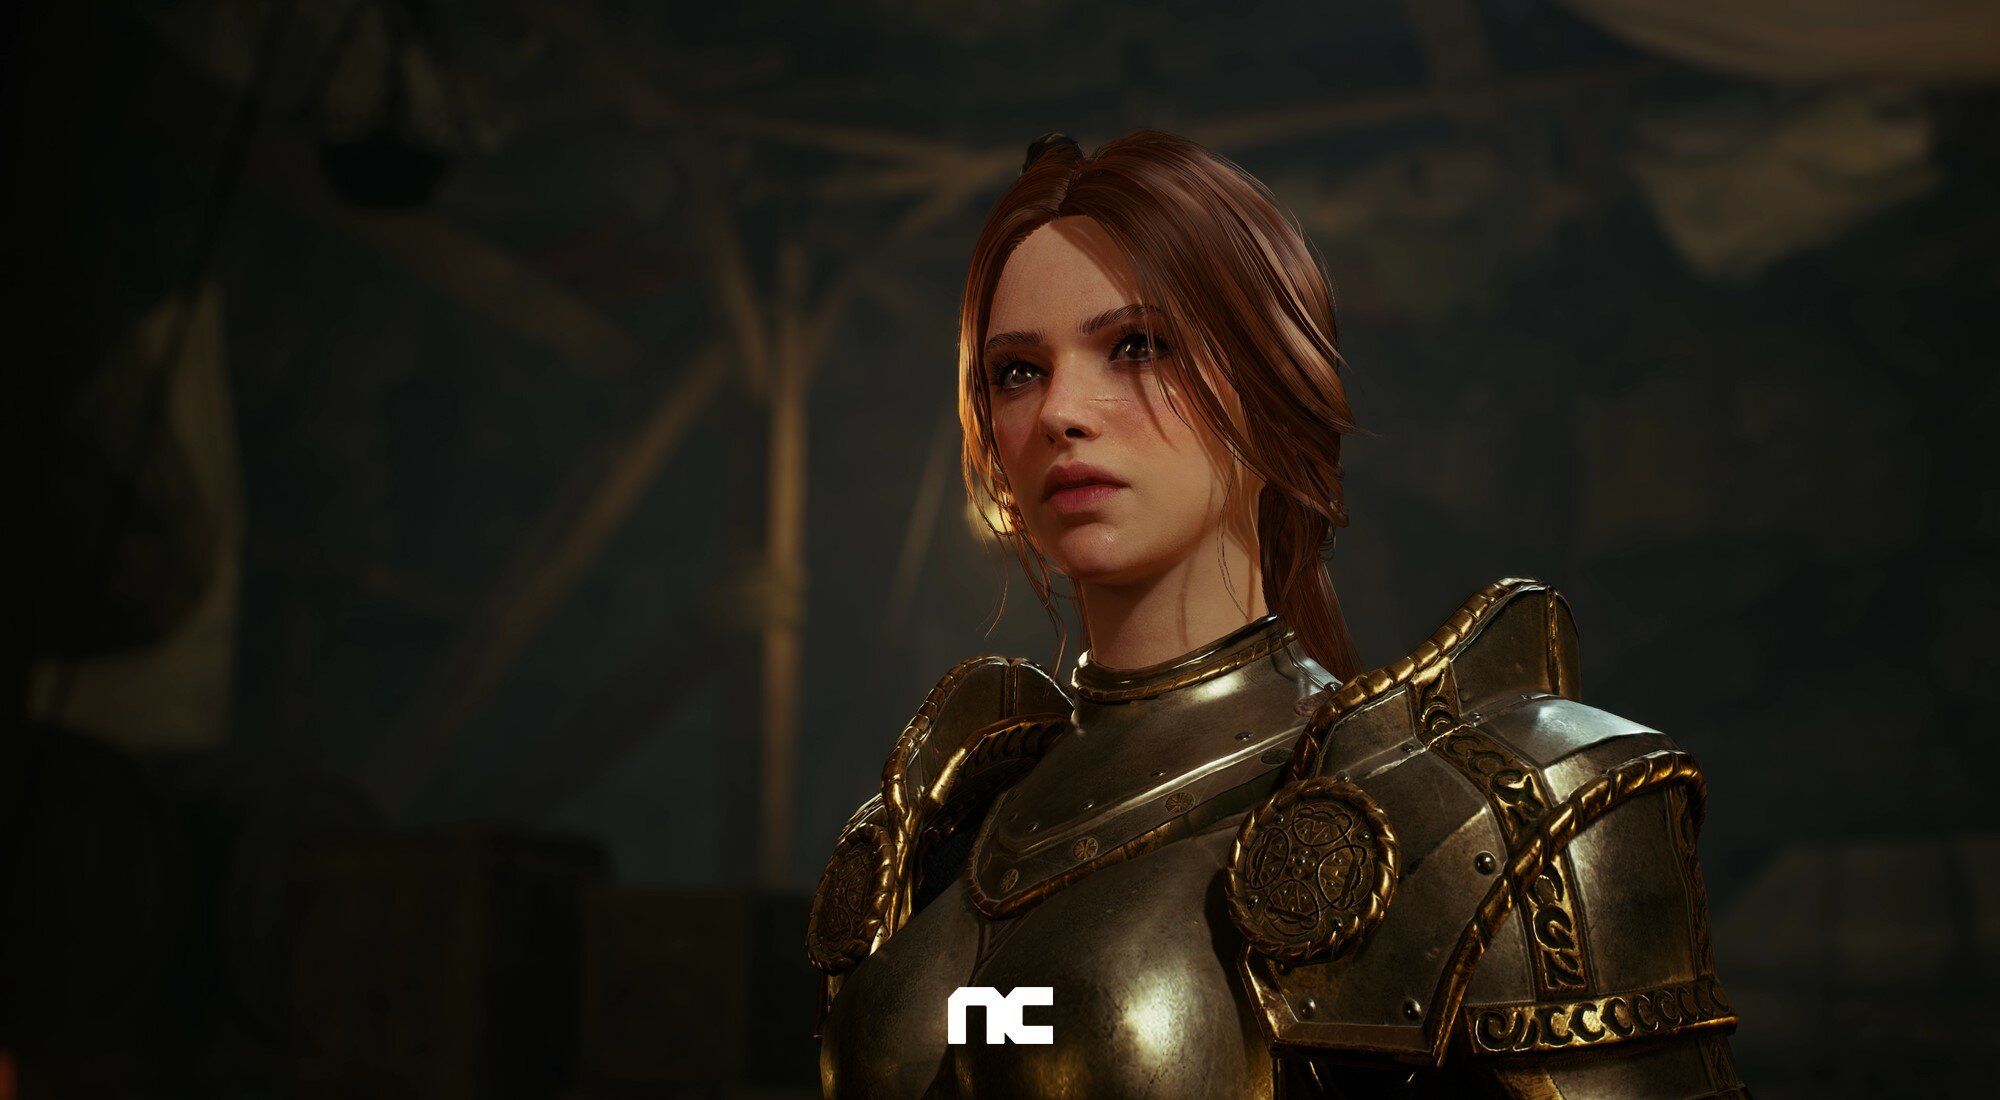 NCSOFT's Next-Generation MMORPG THRONE AND LIBERTY Latest